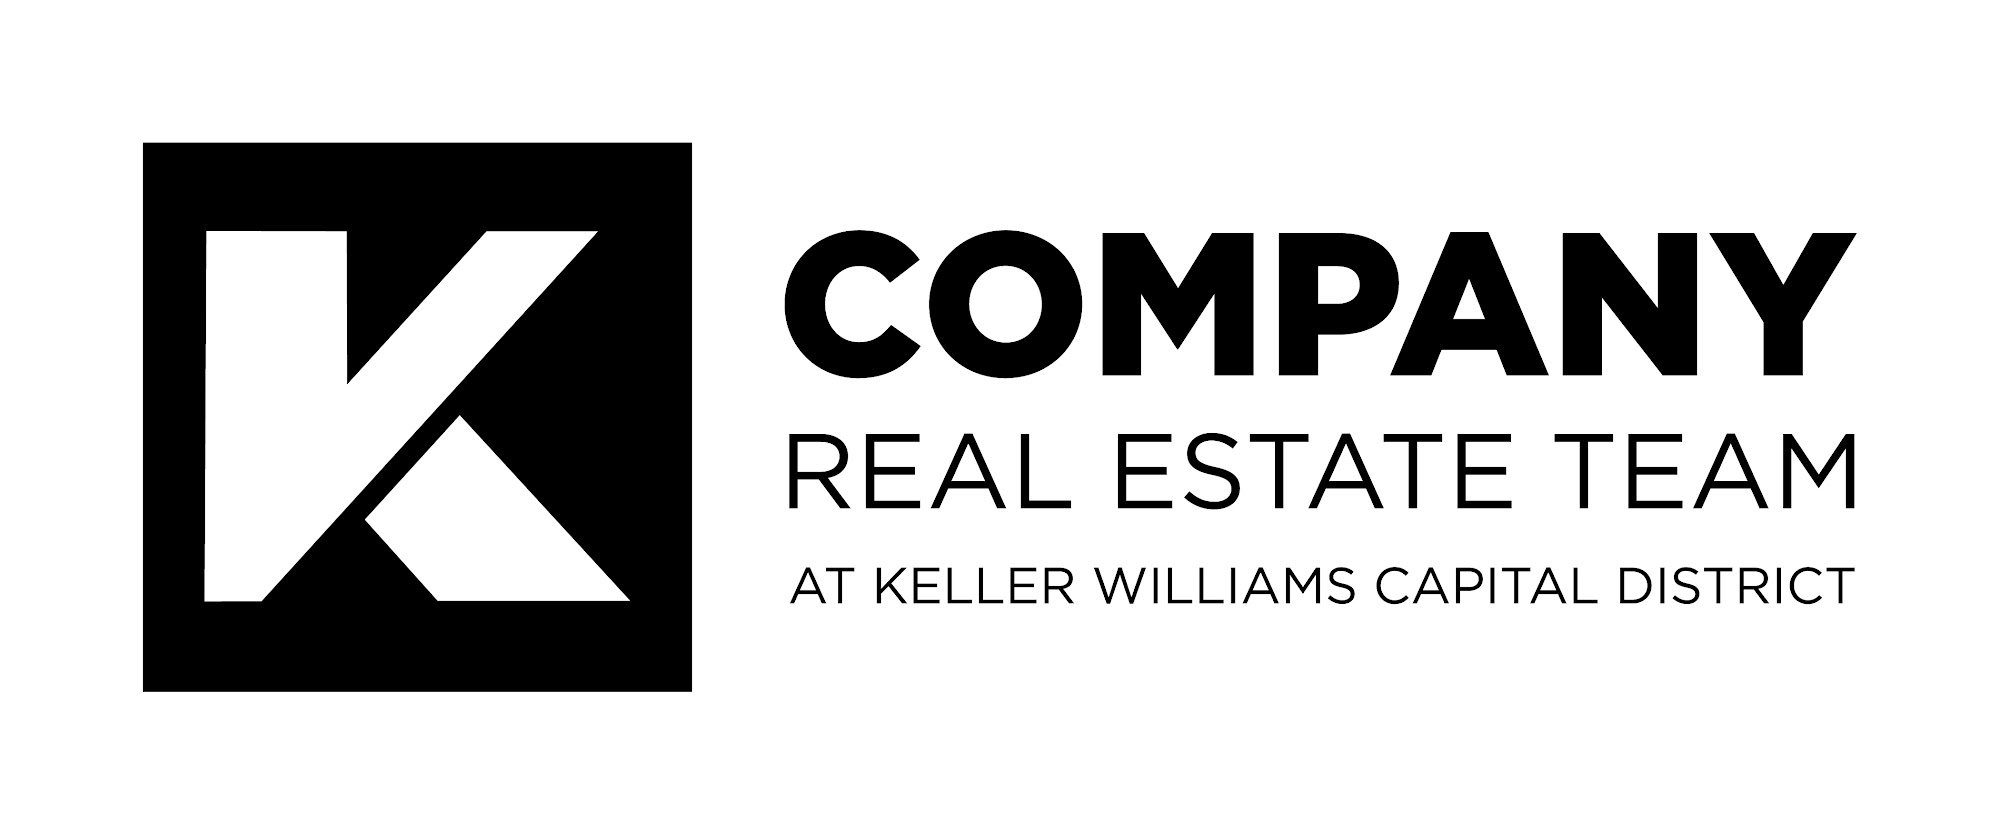 K Company Real Estate Team at Keller Williams Capital District